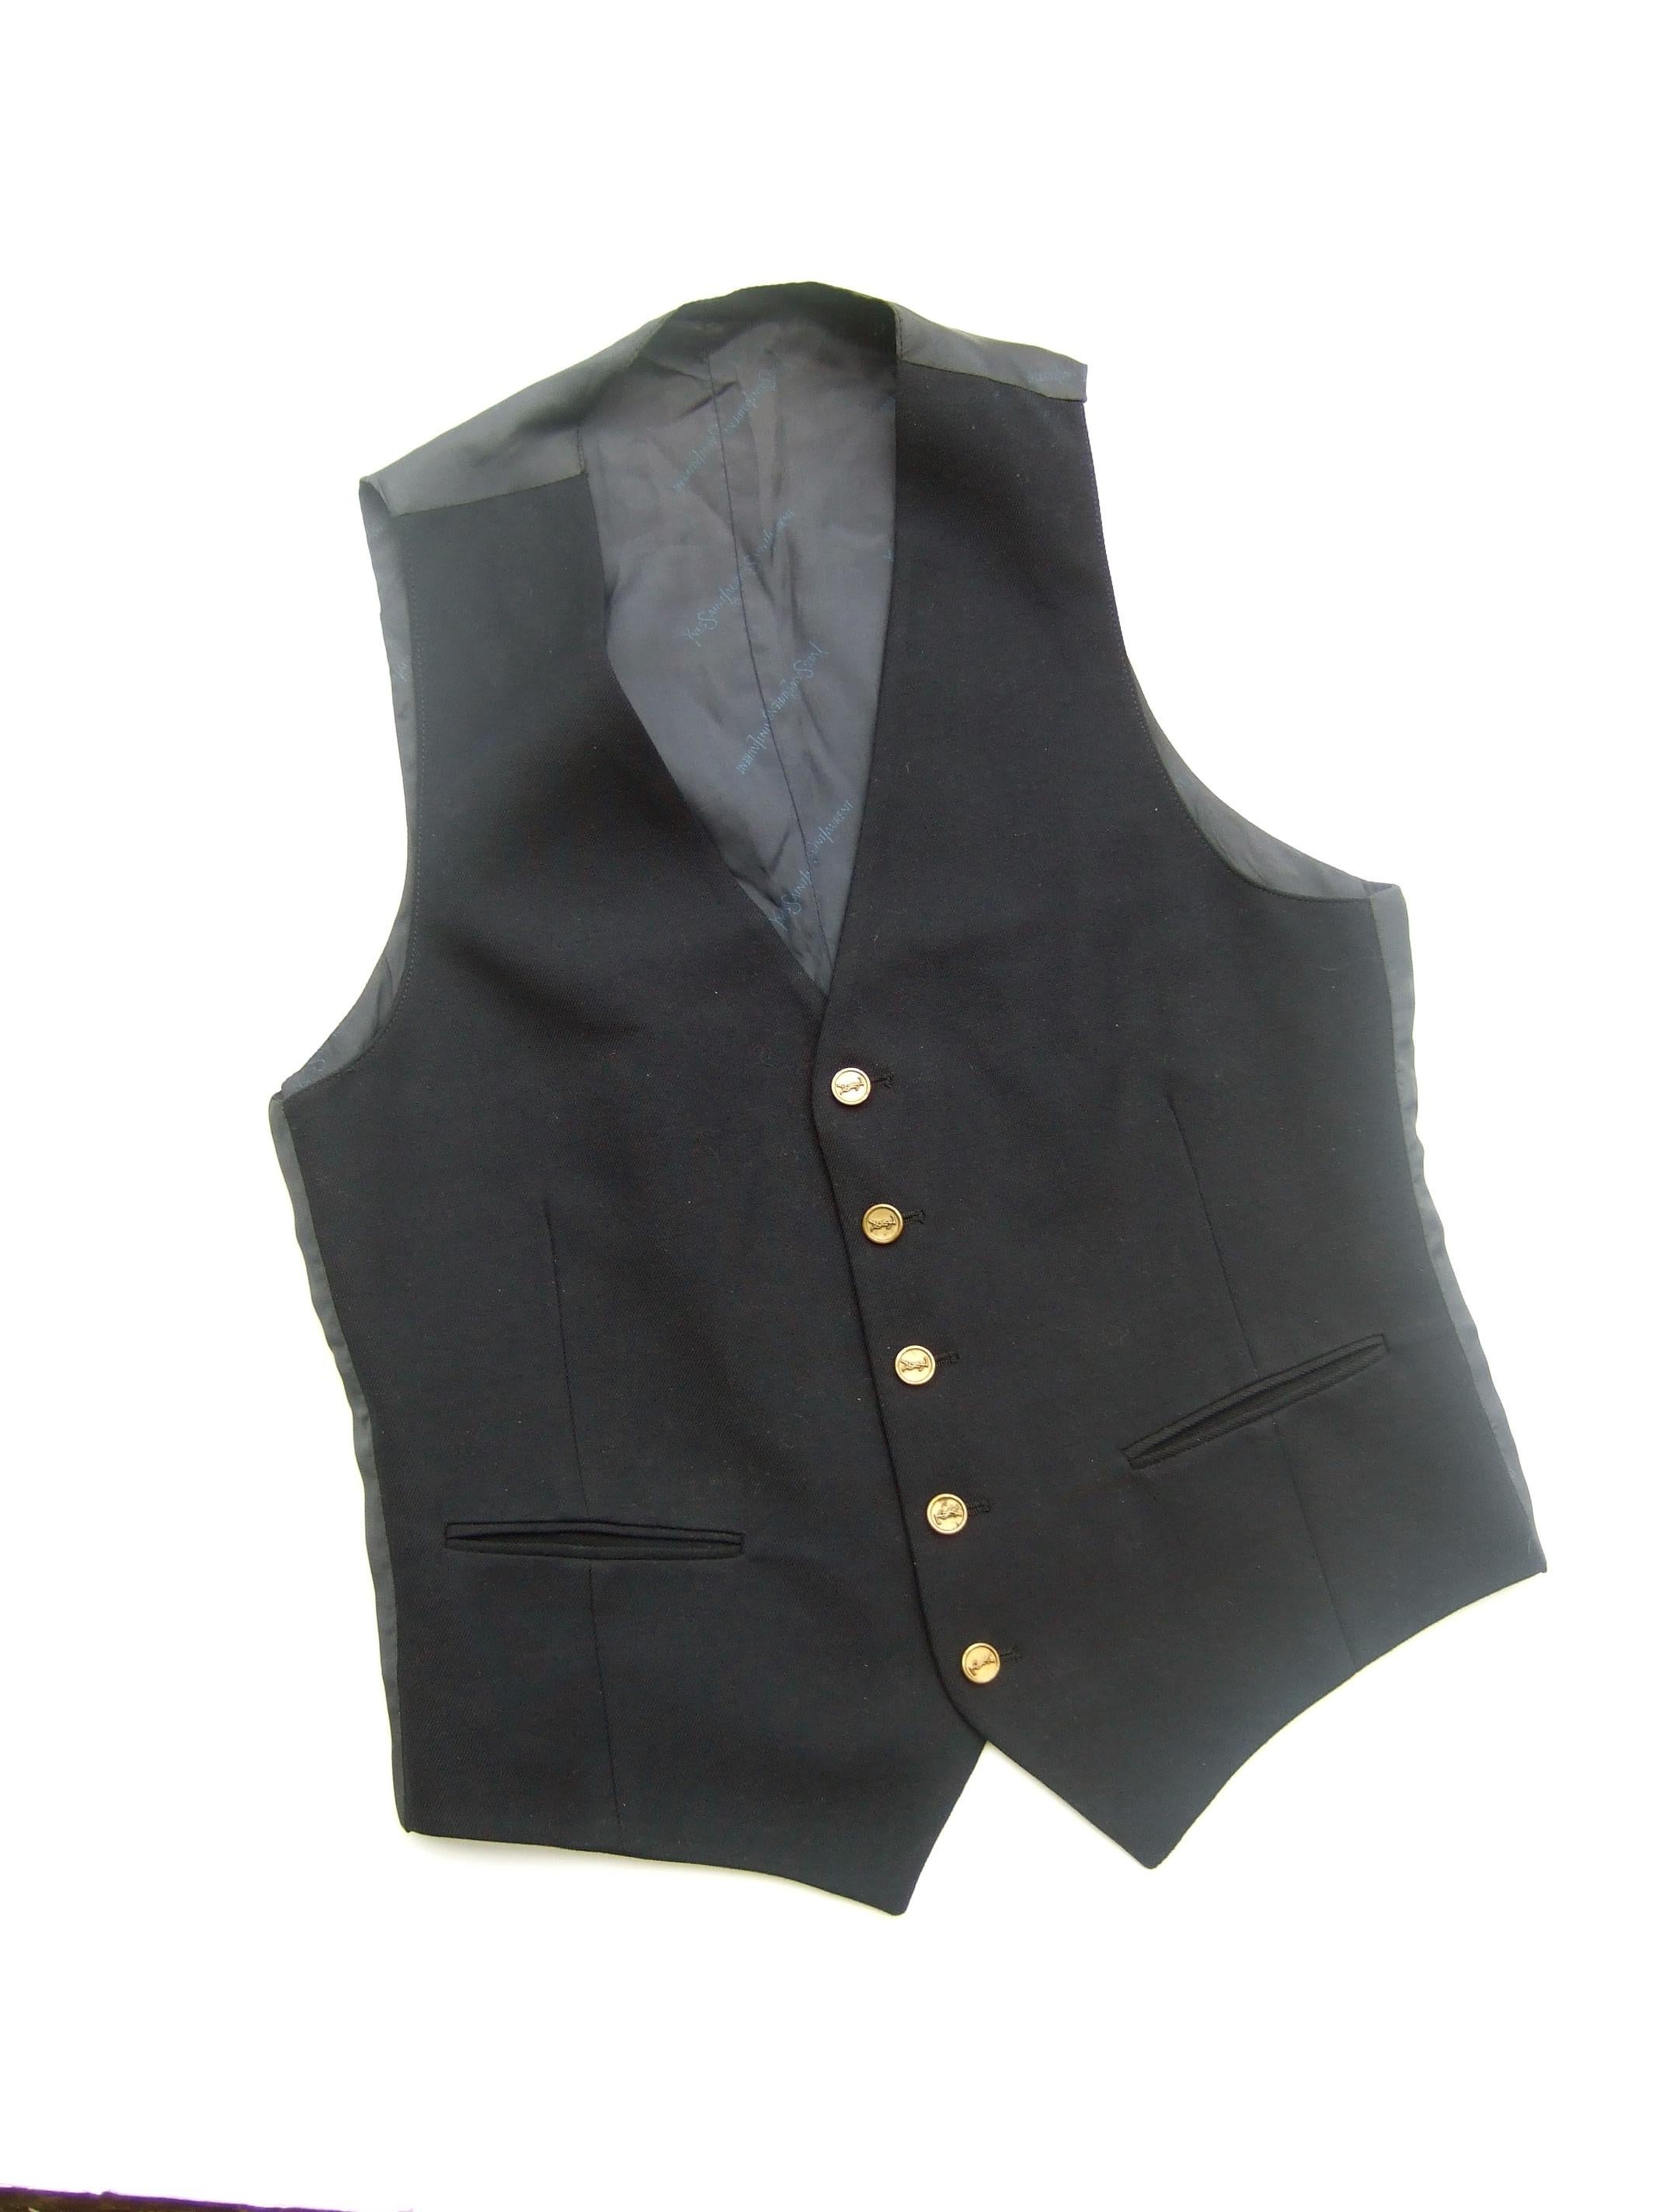 Yves Saint Laurent Brass YSL Buttons Dark Blue Wool Men's Unisex Vest c 1970s For Sale 1